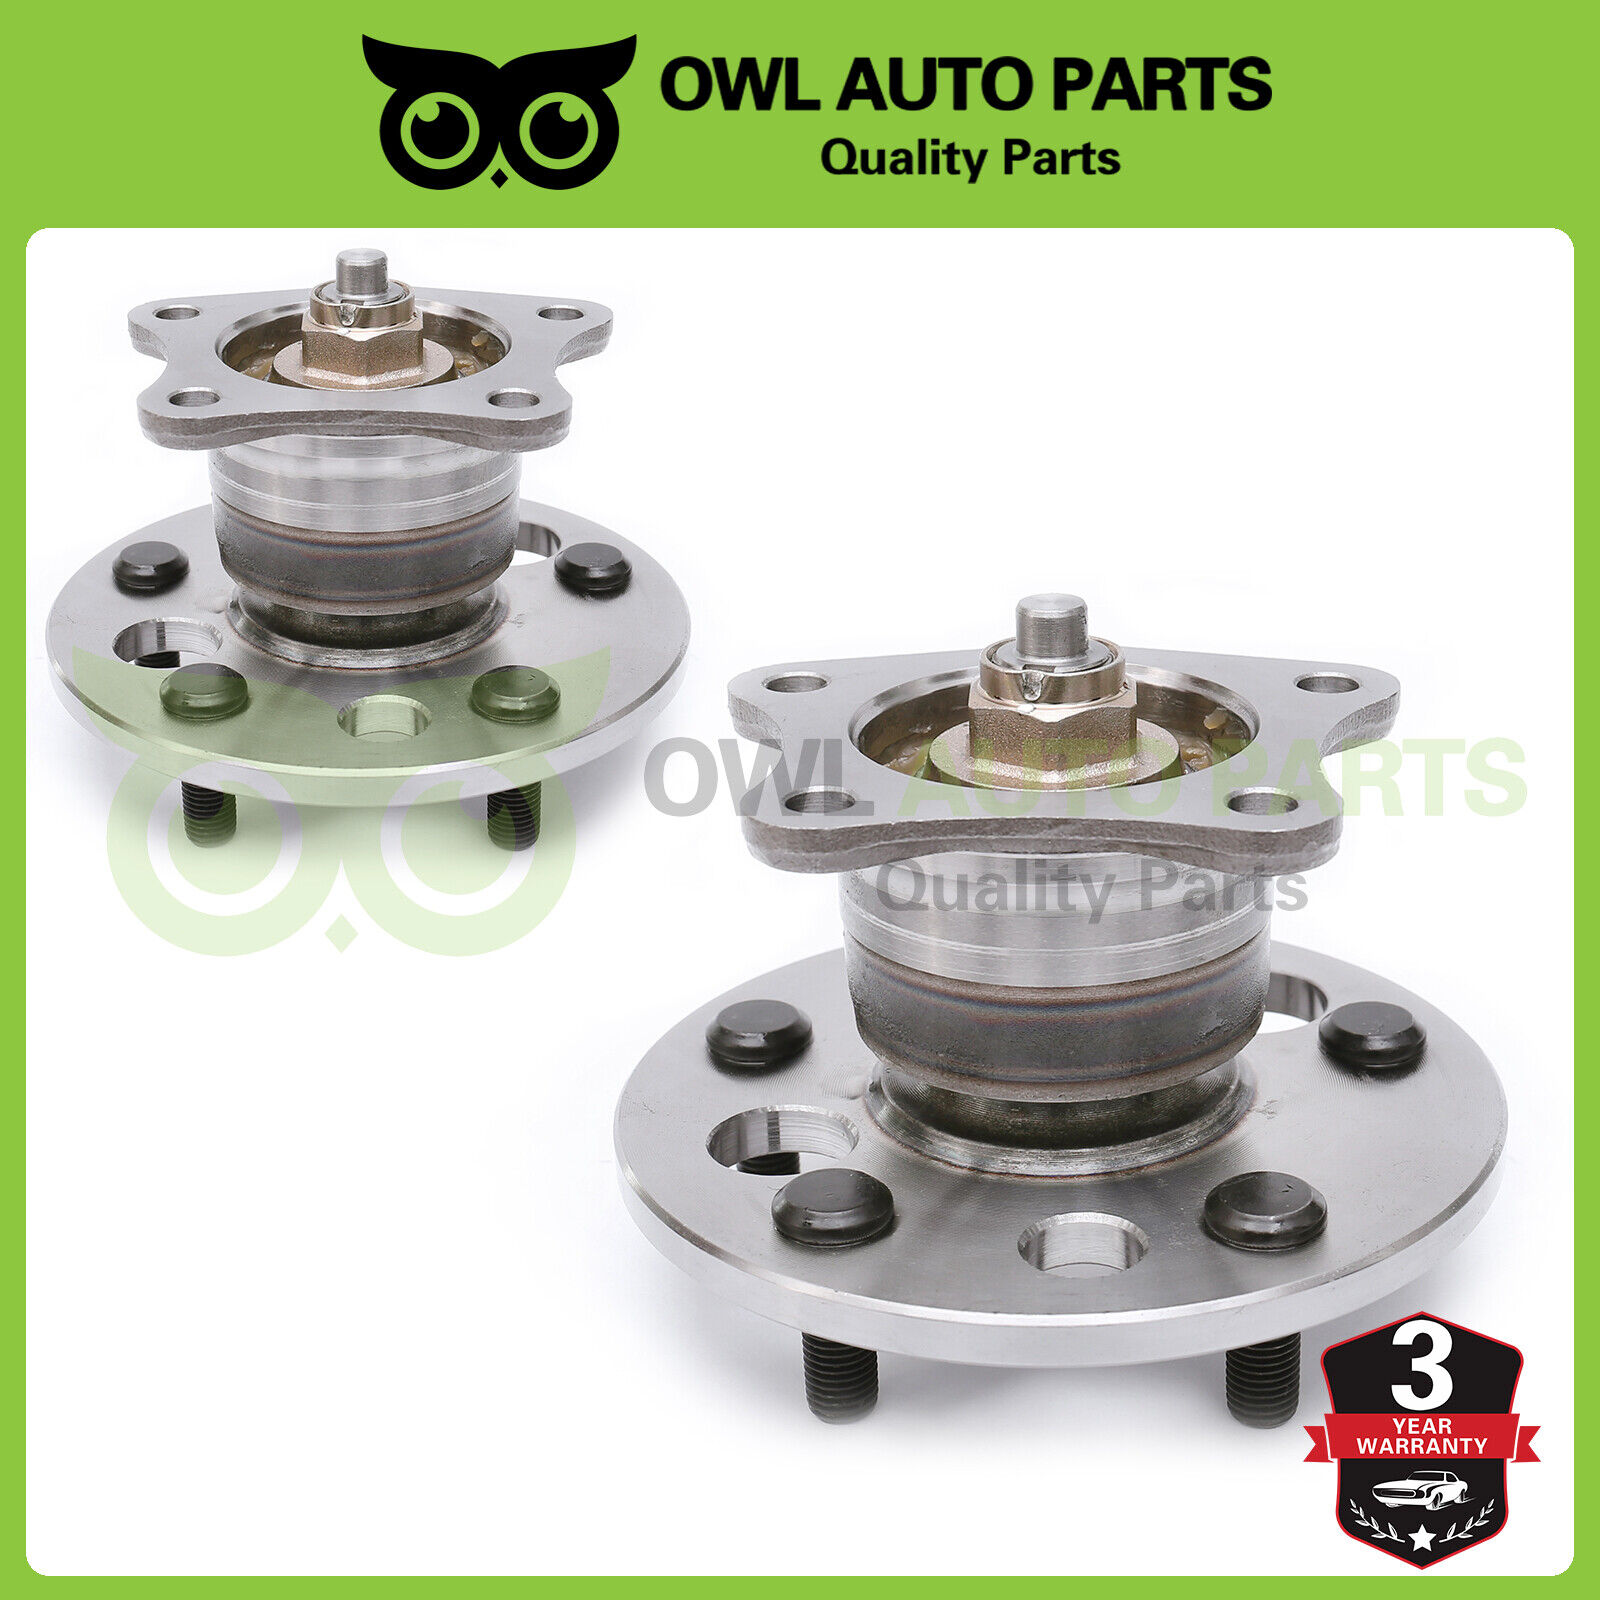 Pair 2 Rear Wheel Bearings & Hubs for ES300 RX300 Toyota Avalon Camry Solara